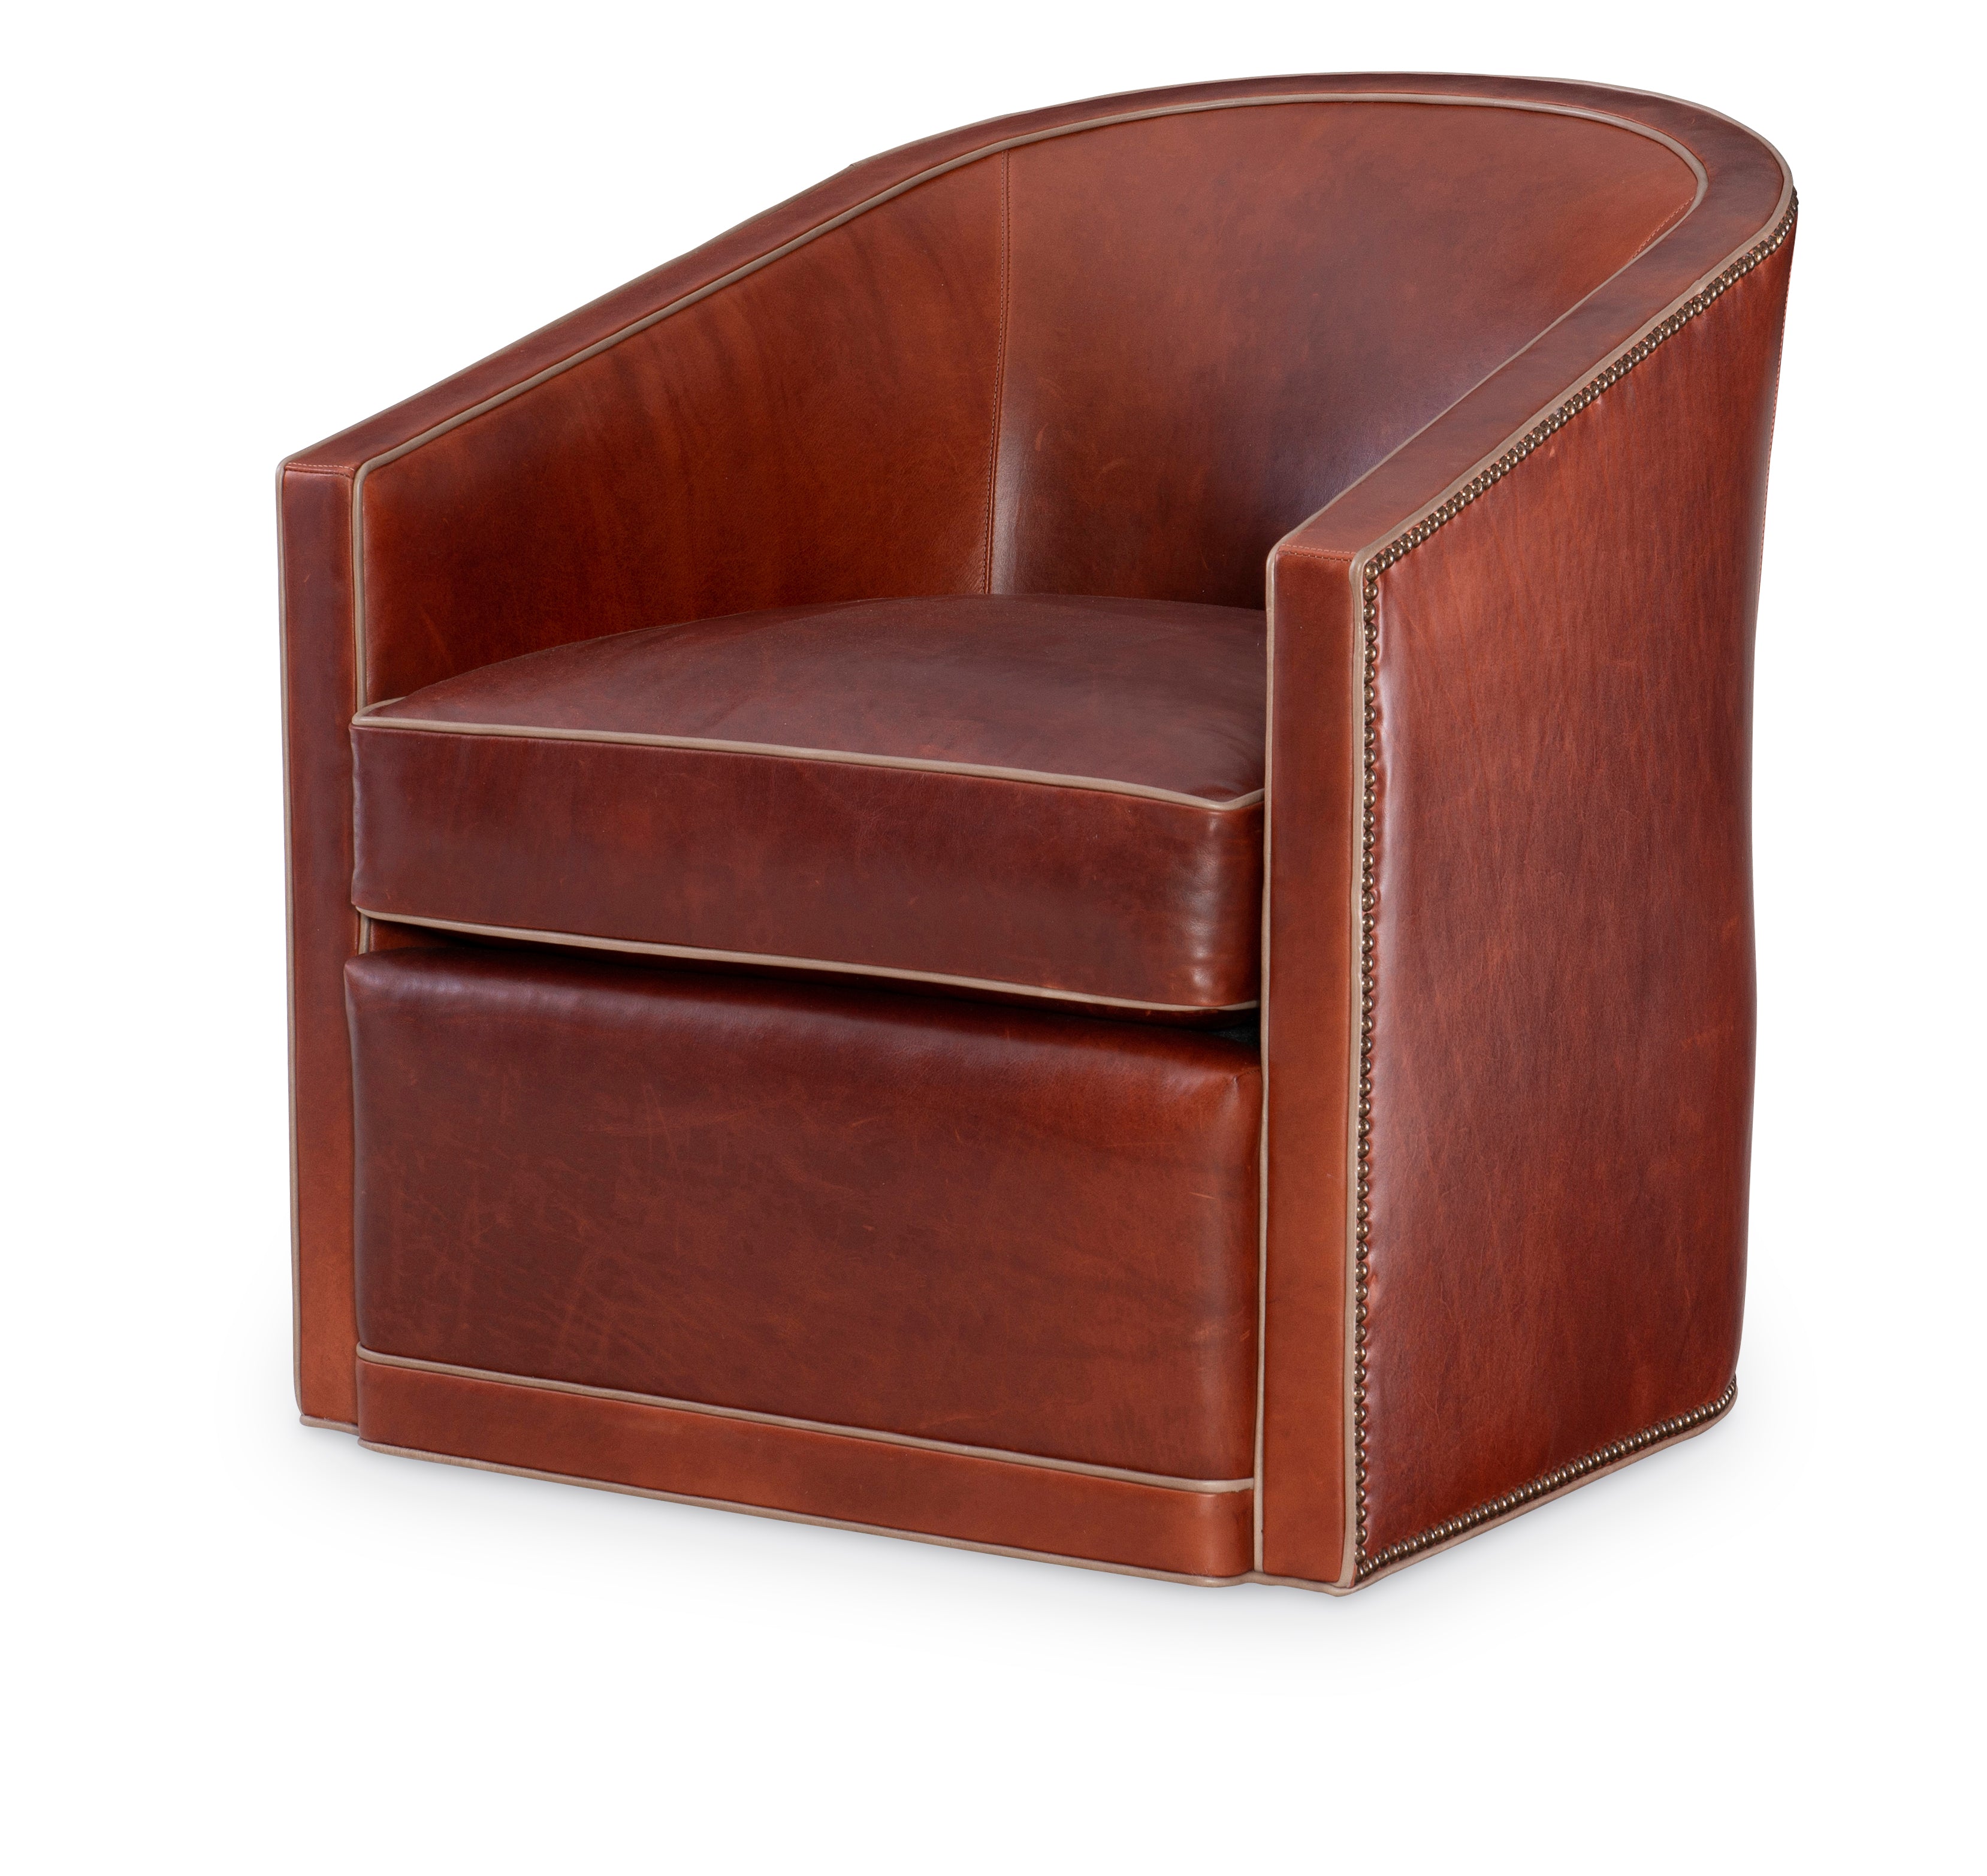 RADCLIFFE SWIVEL CHAIR - Hedi's Furniture